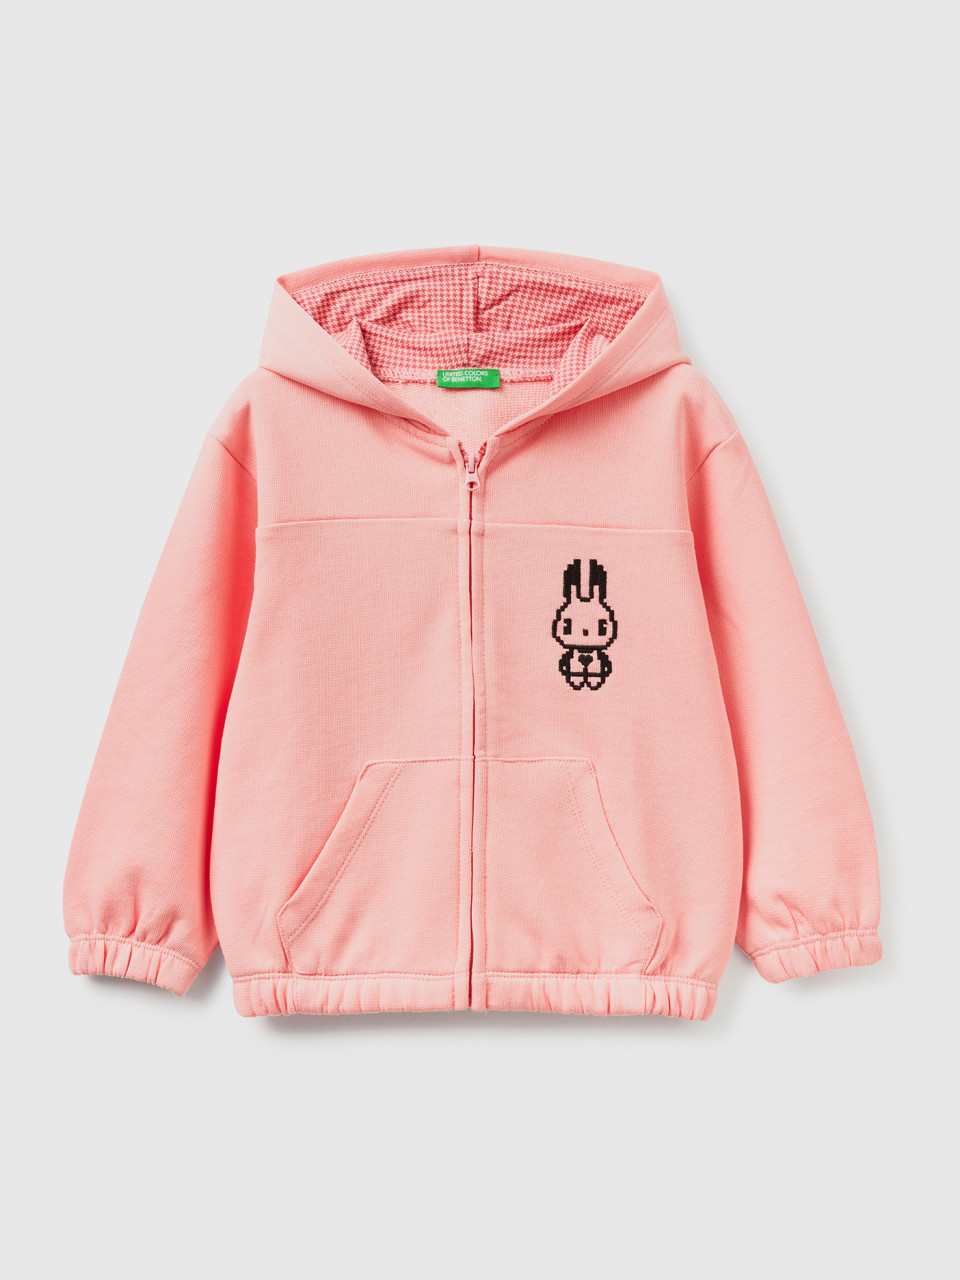 Benetton, Sweatshirt With Pixel Embroidery, Pink, Kids